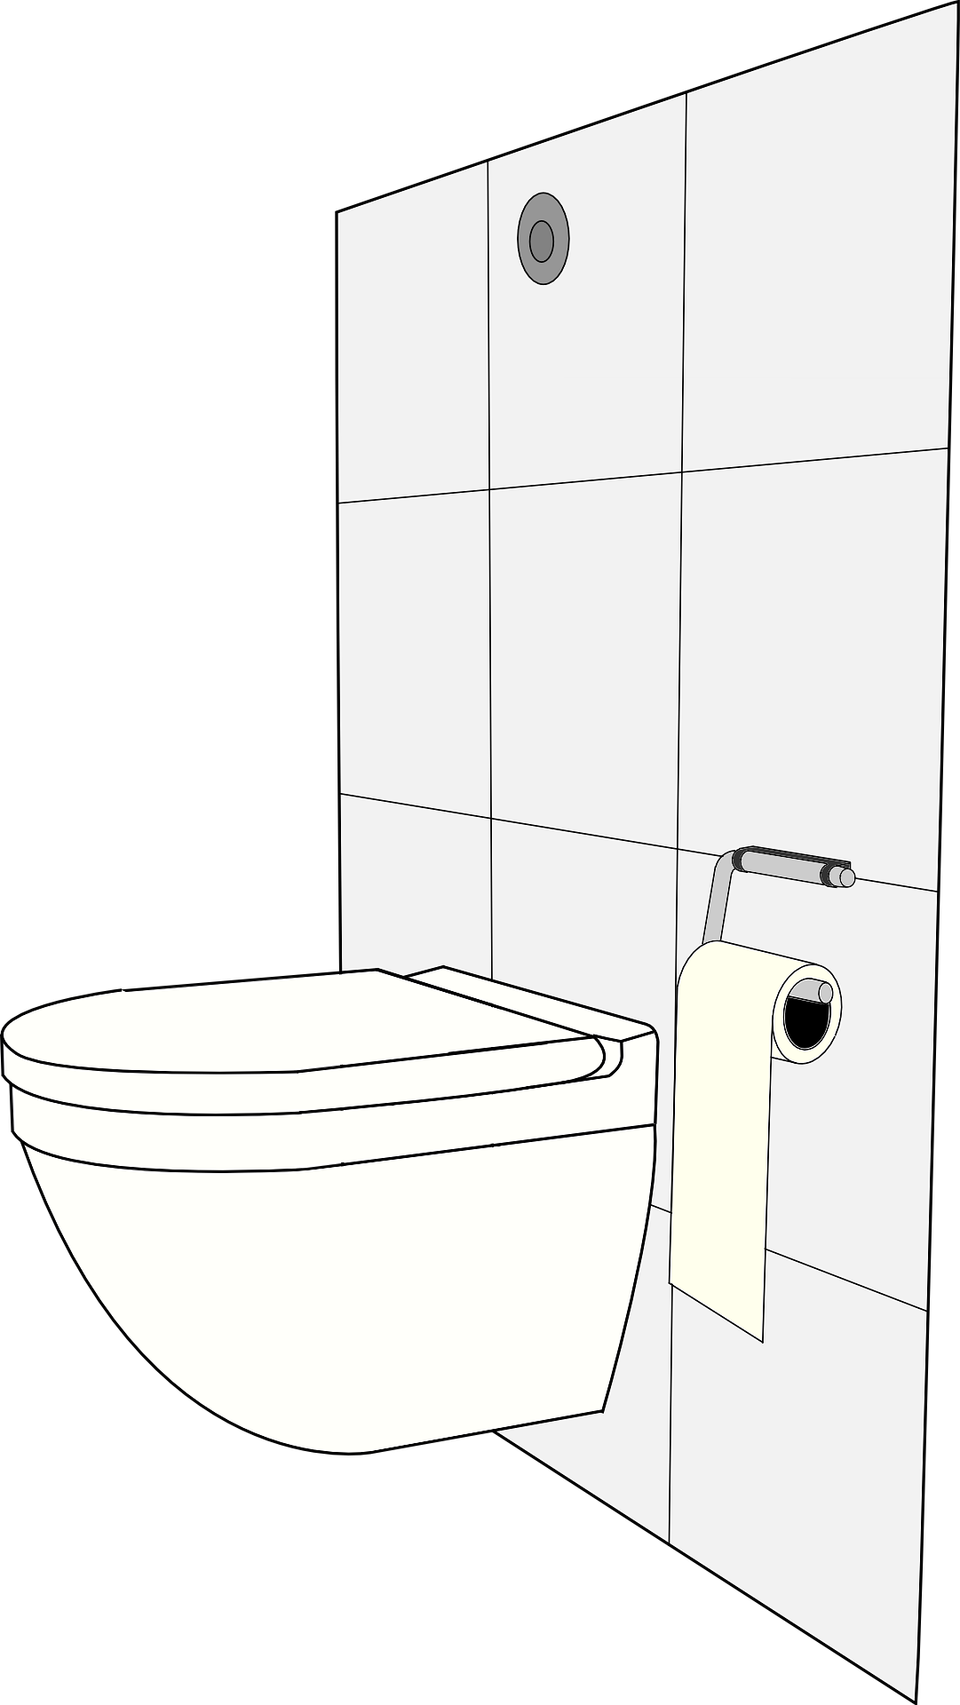 Toilet gbc0ad459d 1920